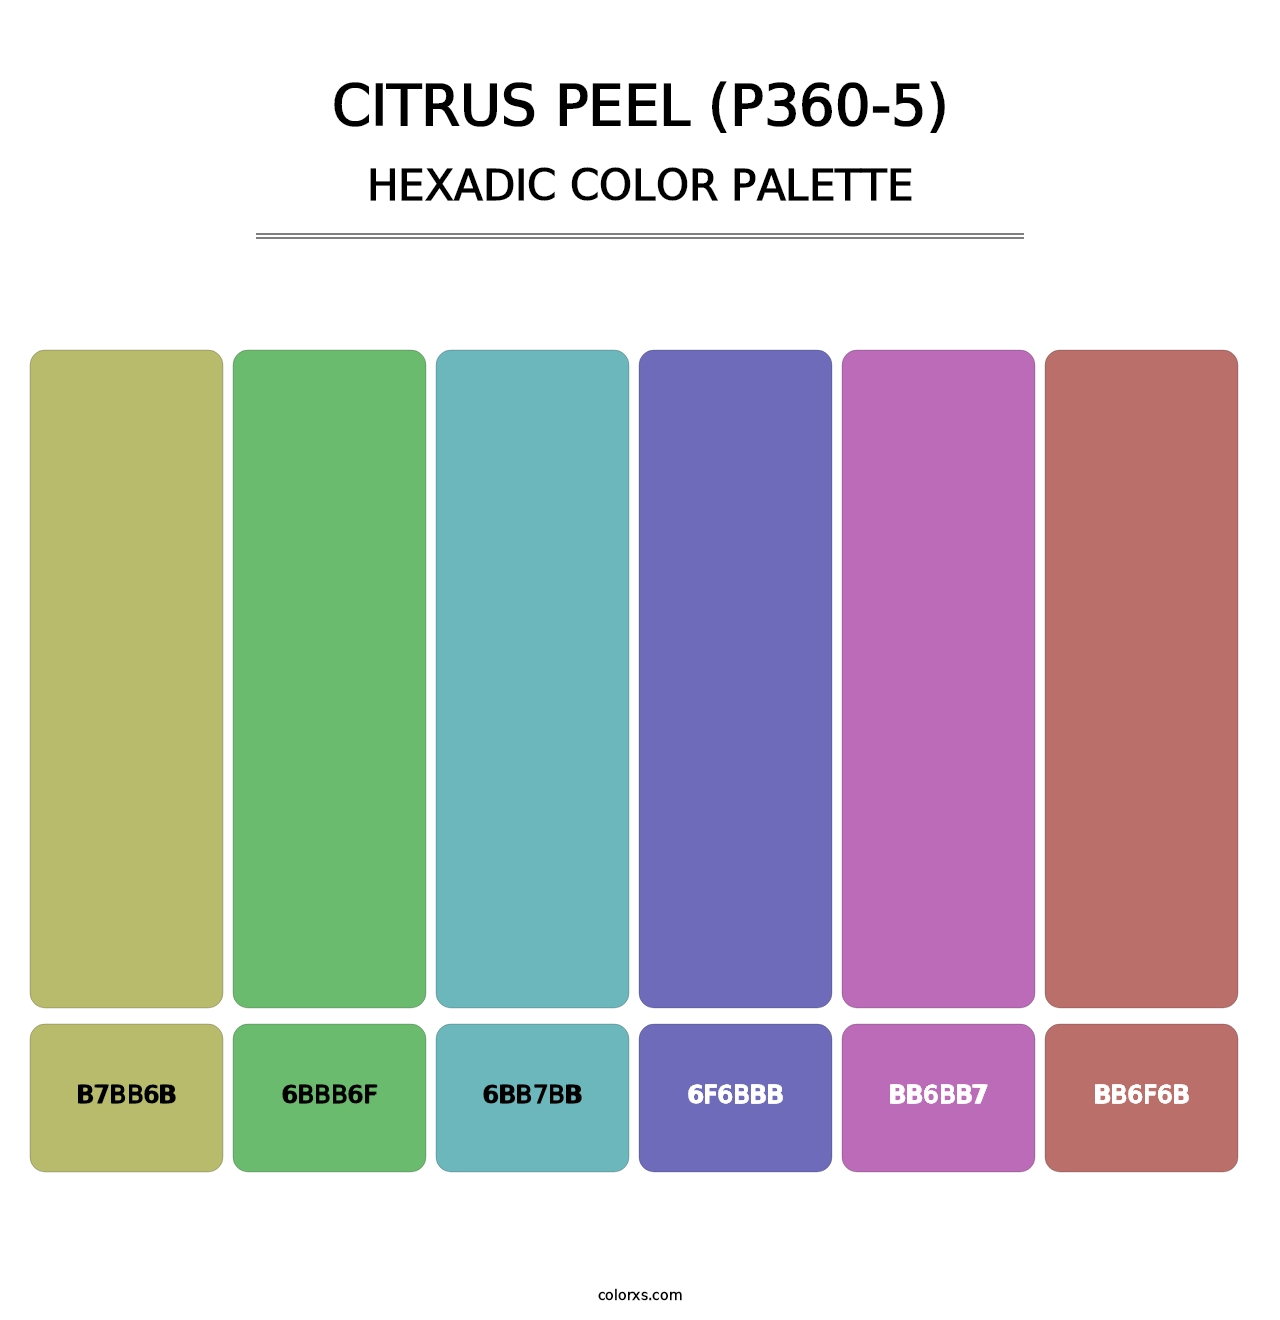 Citrus Peel (P360-5) - Hexadic Color Palette